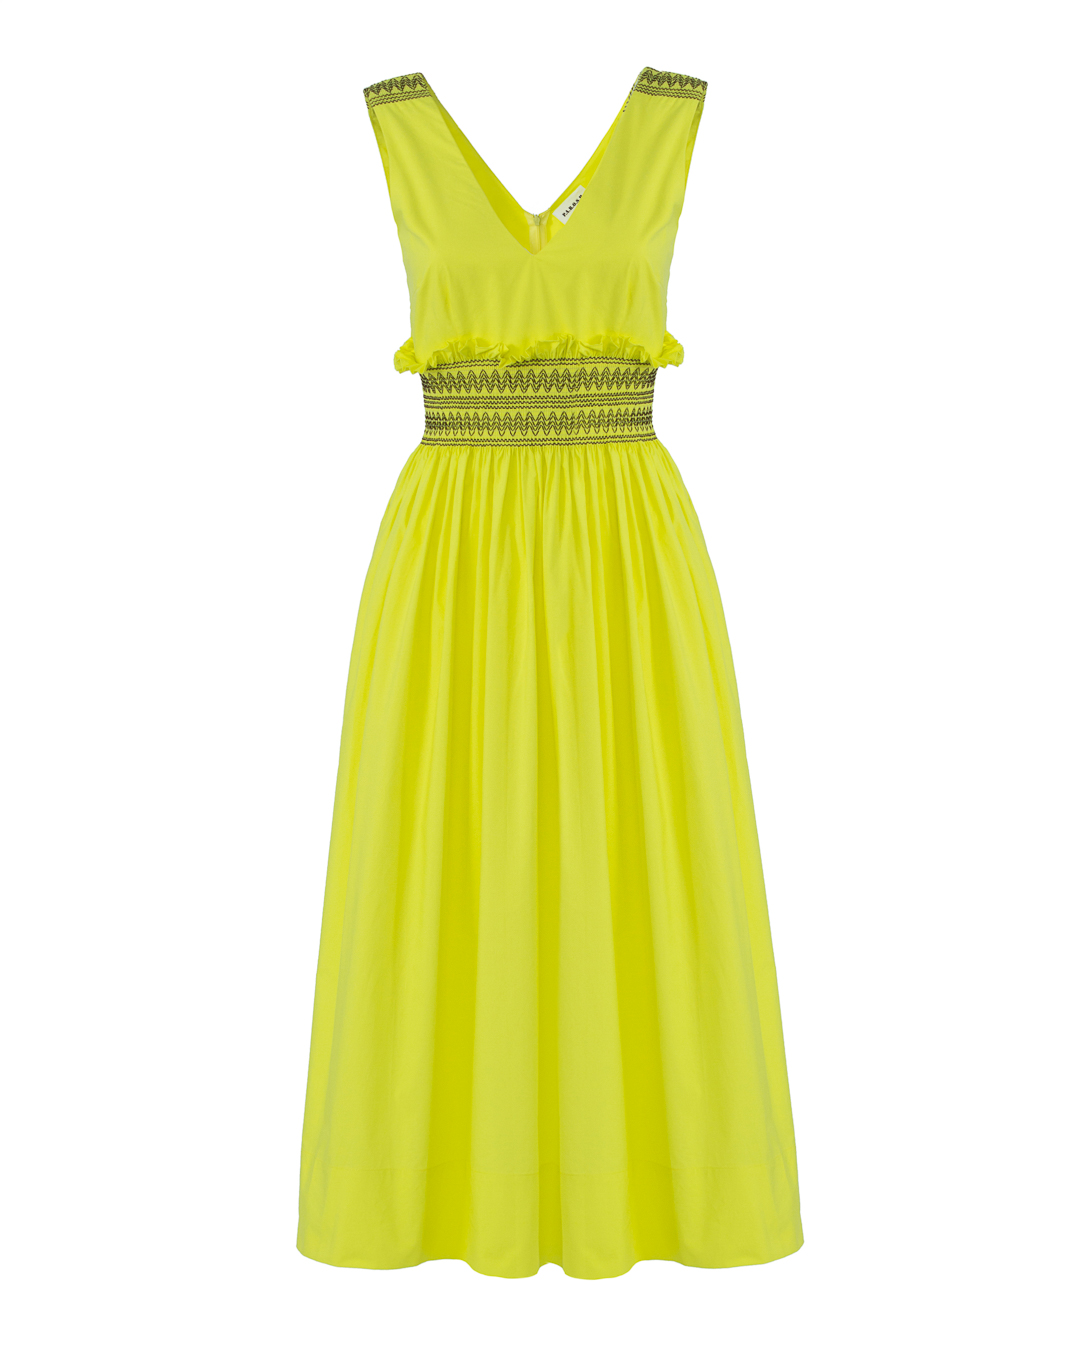 платье P.A.R.O.S.H. CANYOXD724250 желтый+принт l, размер l, цвет желтый+принт CANYOXD724250 желтый+принт l - фото 1